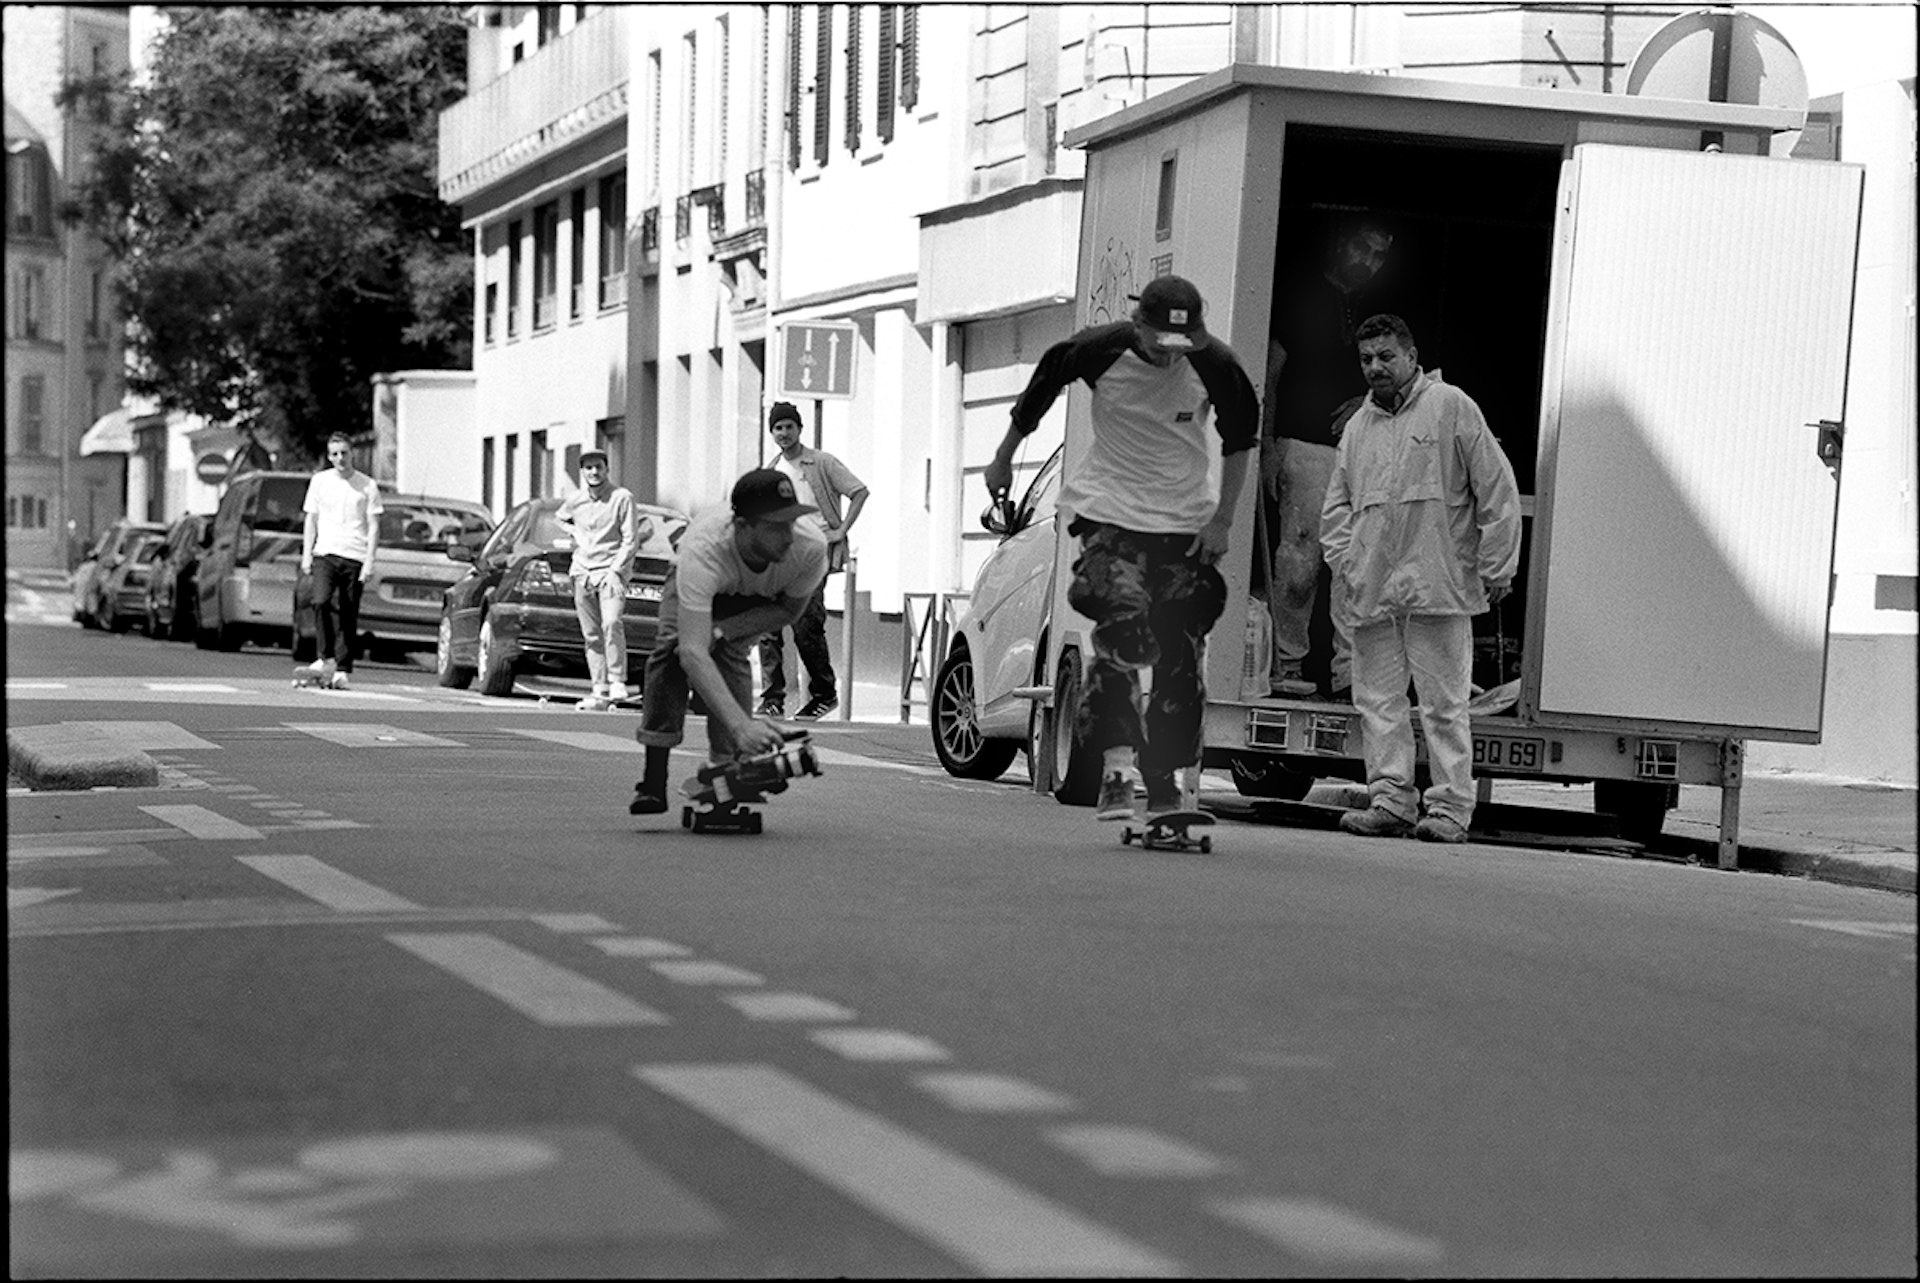 Skate video series Parisii maps each of Paris’ twenty arrondissements